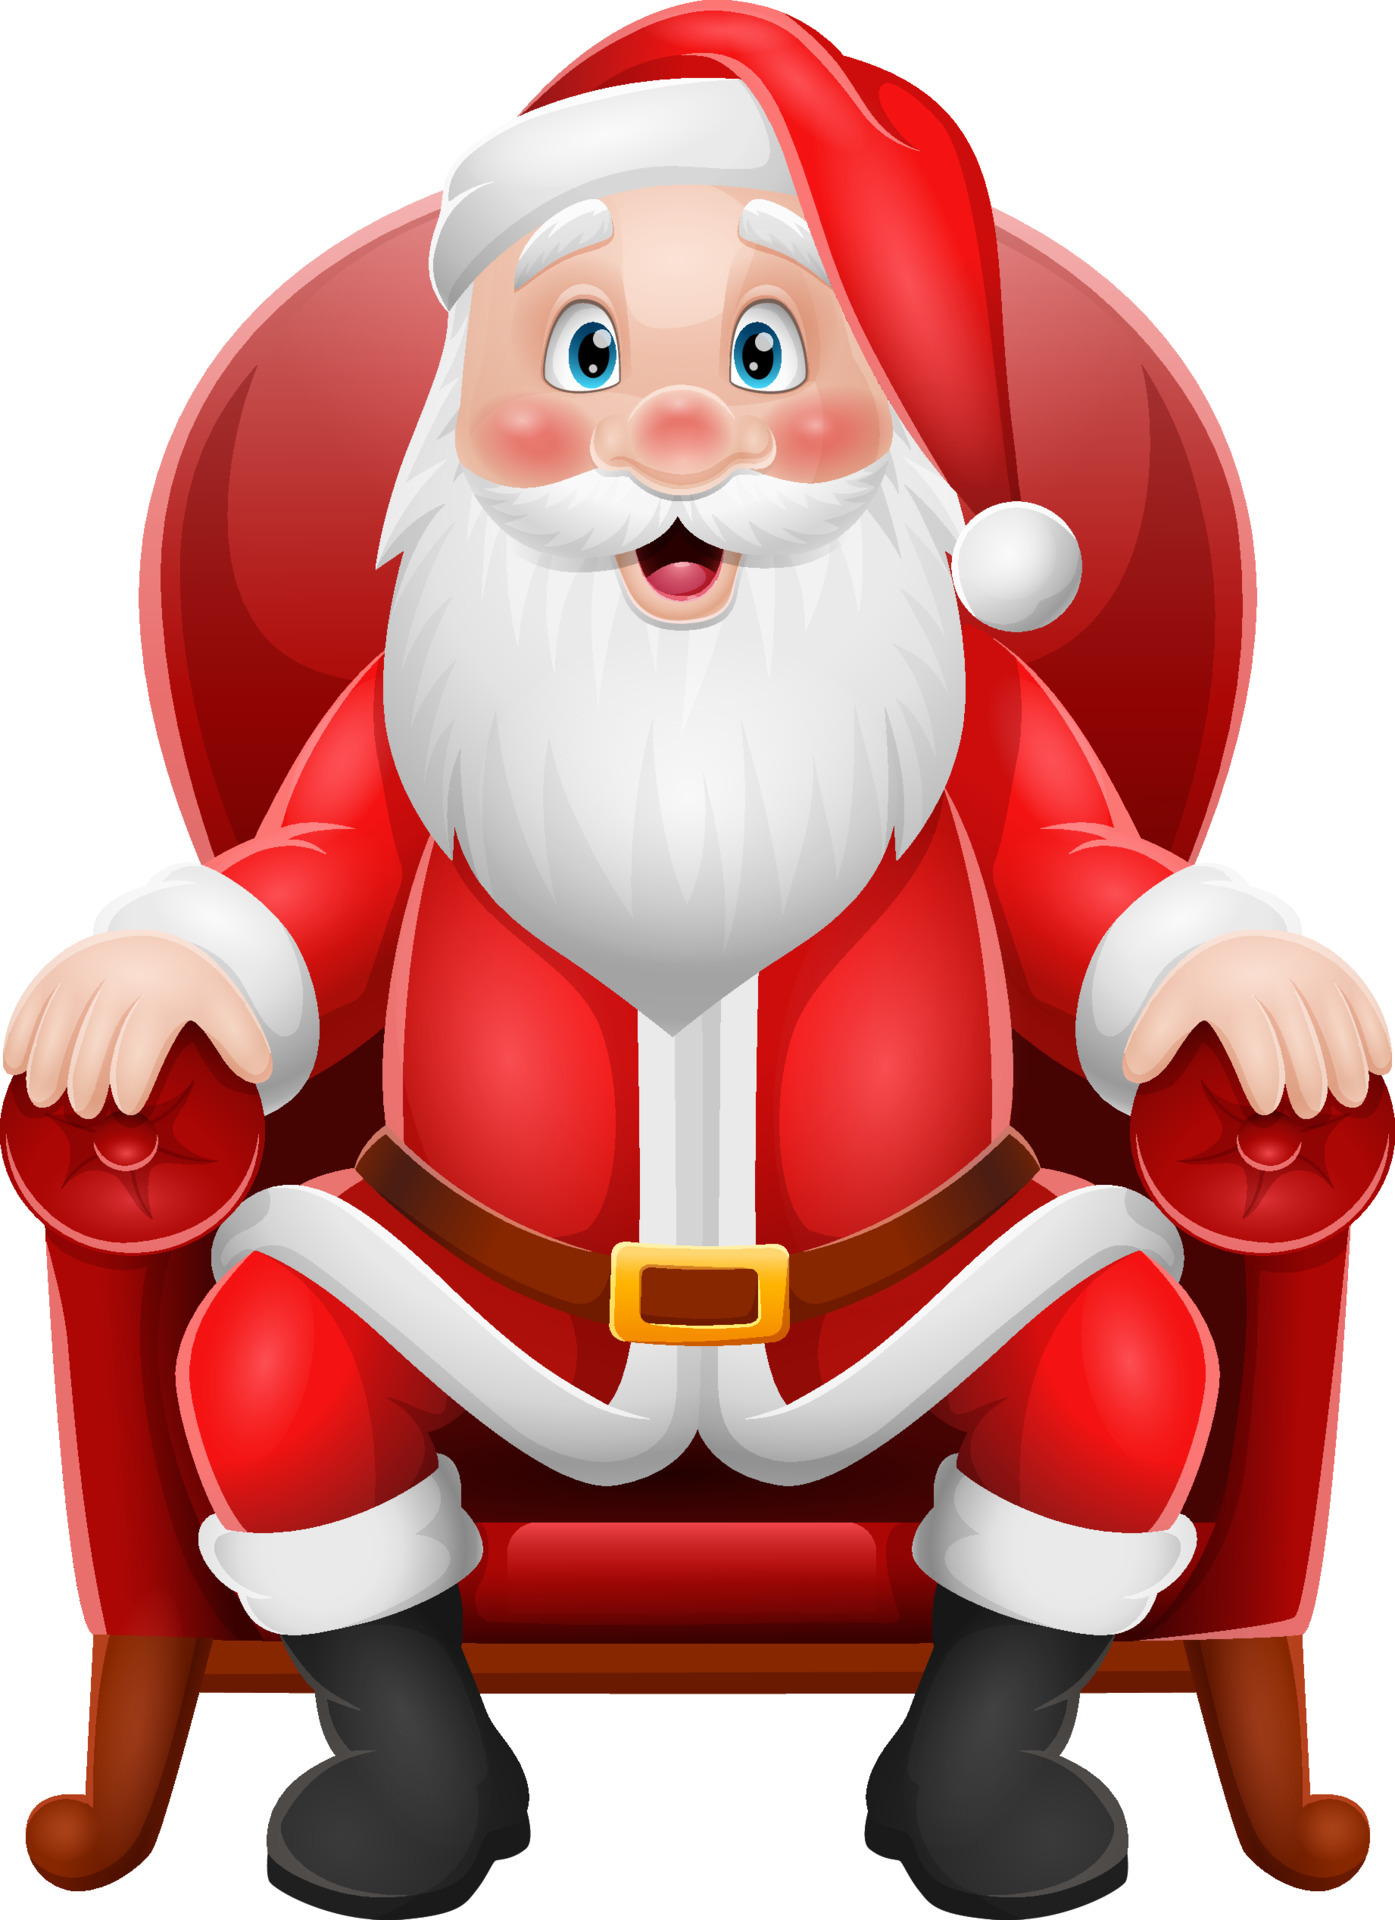 Santas Beard Vector Art, Icons, and Graphics for Free Download